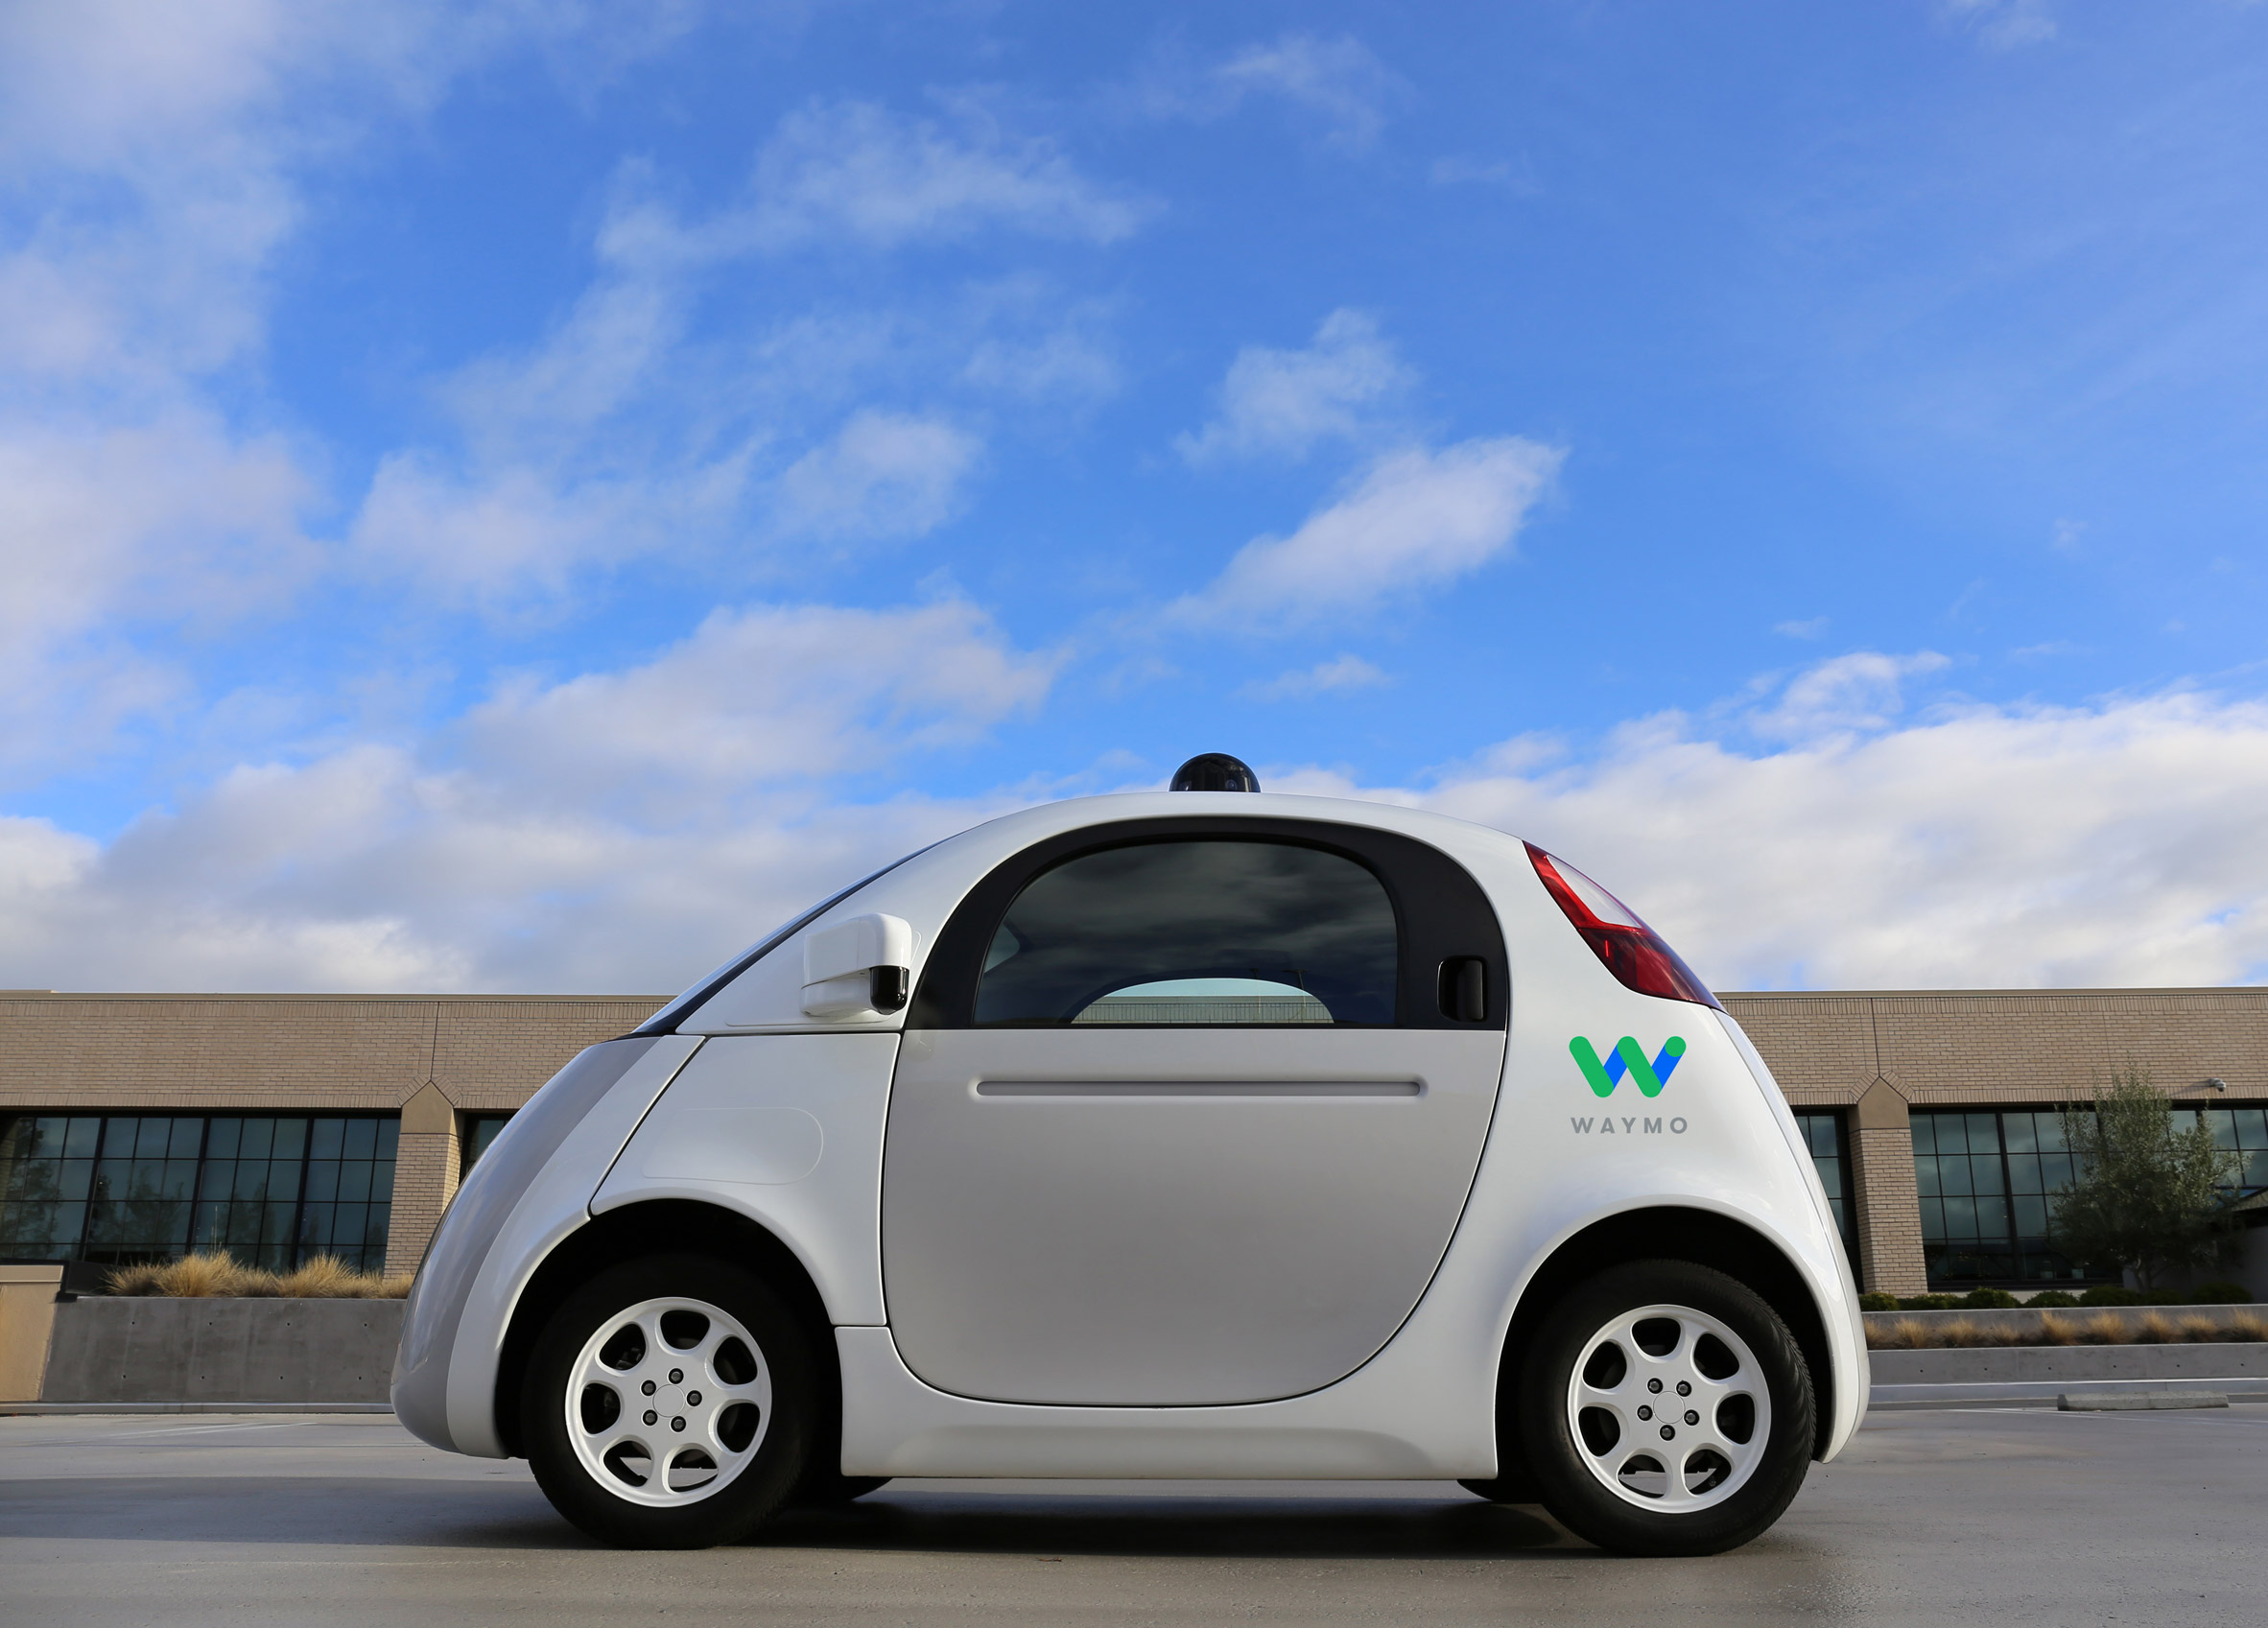 google-spins-off-self-driving-car-company-waymo-transport-self-driving-vehicles_dezeen_2364_col_5